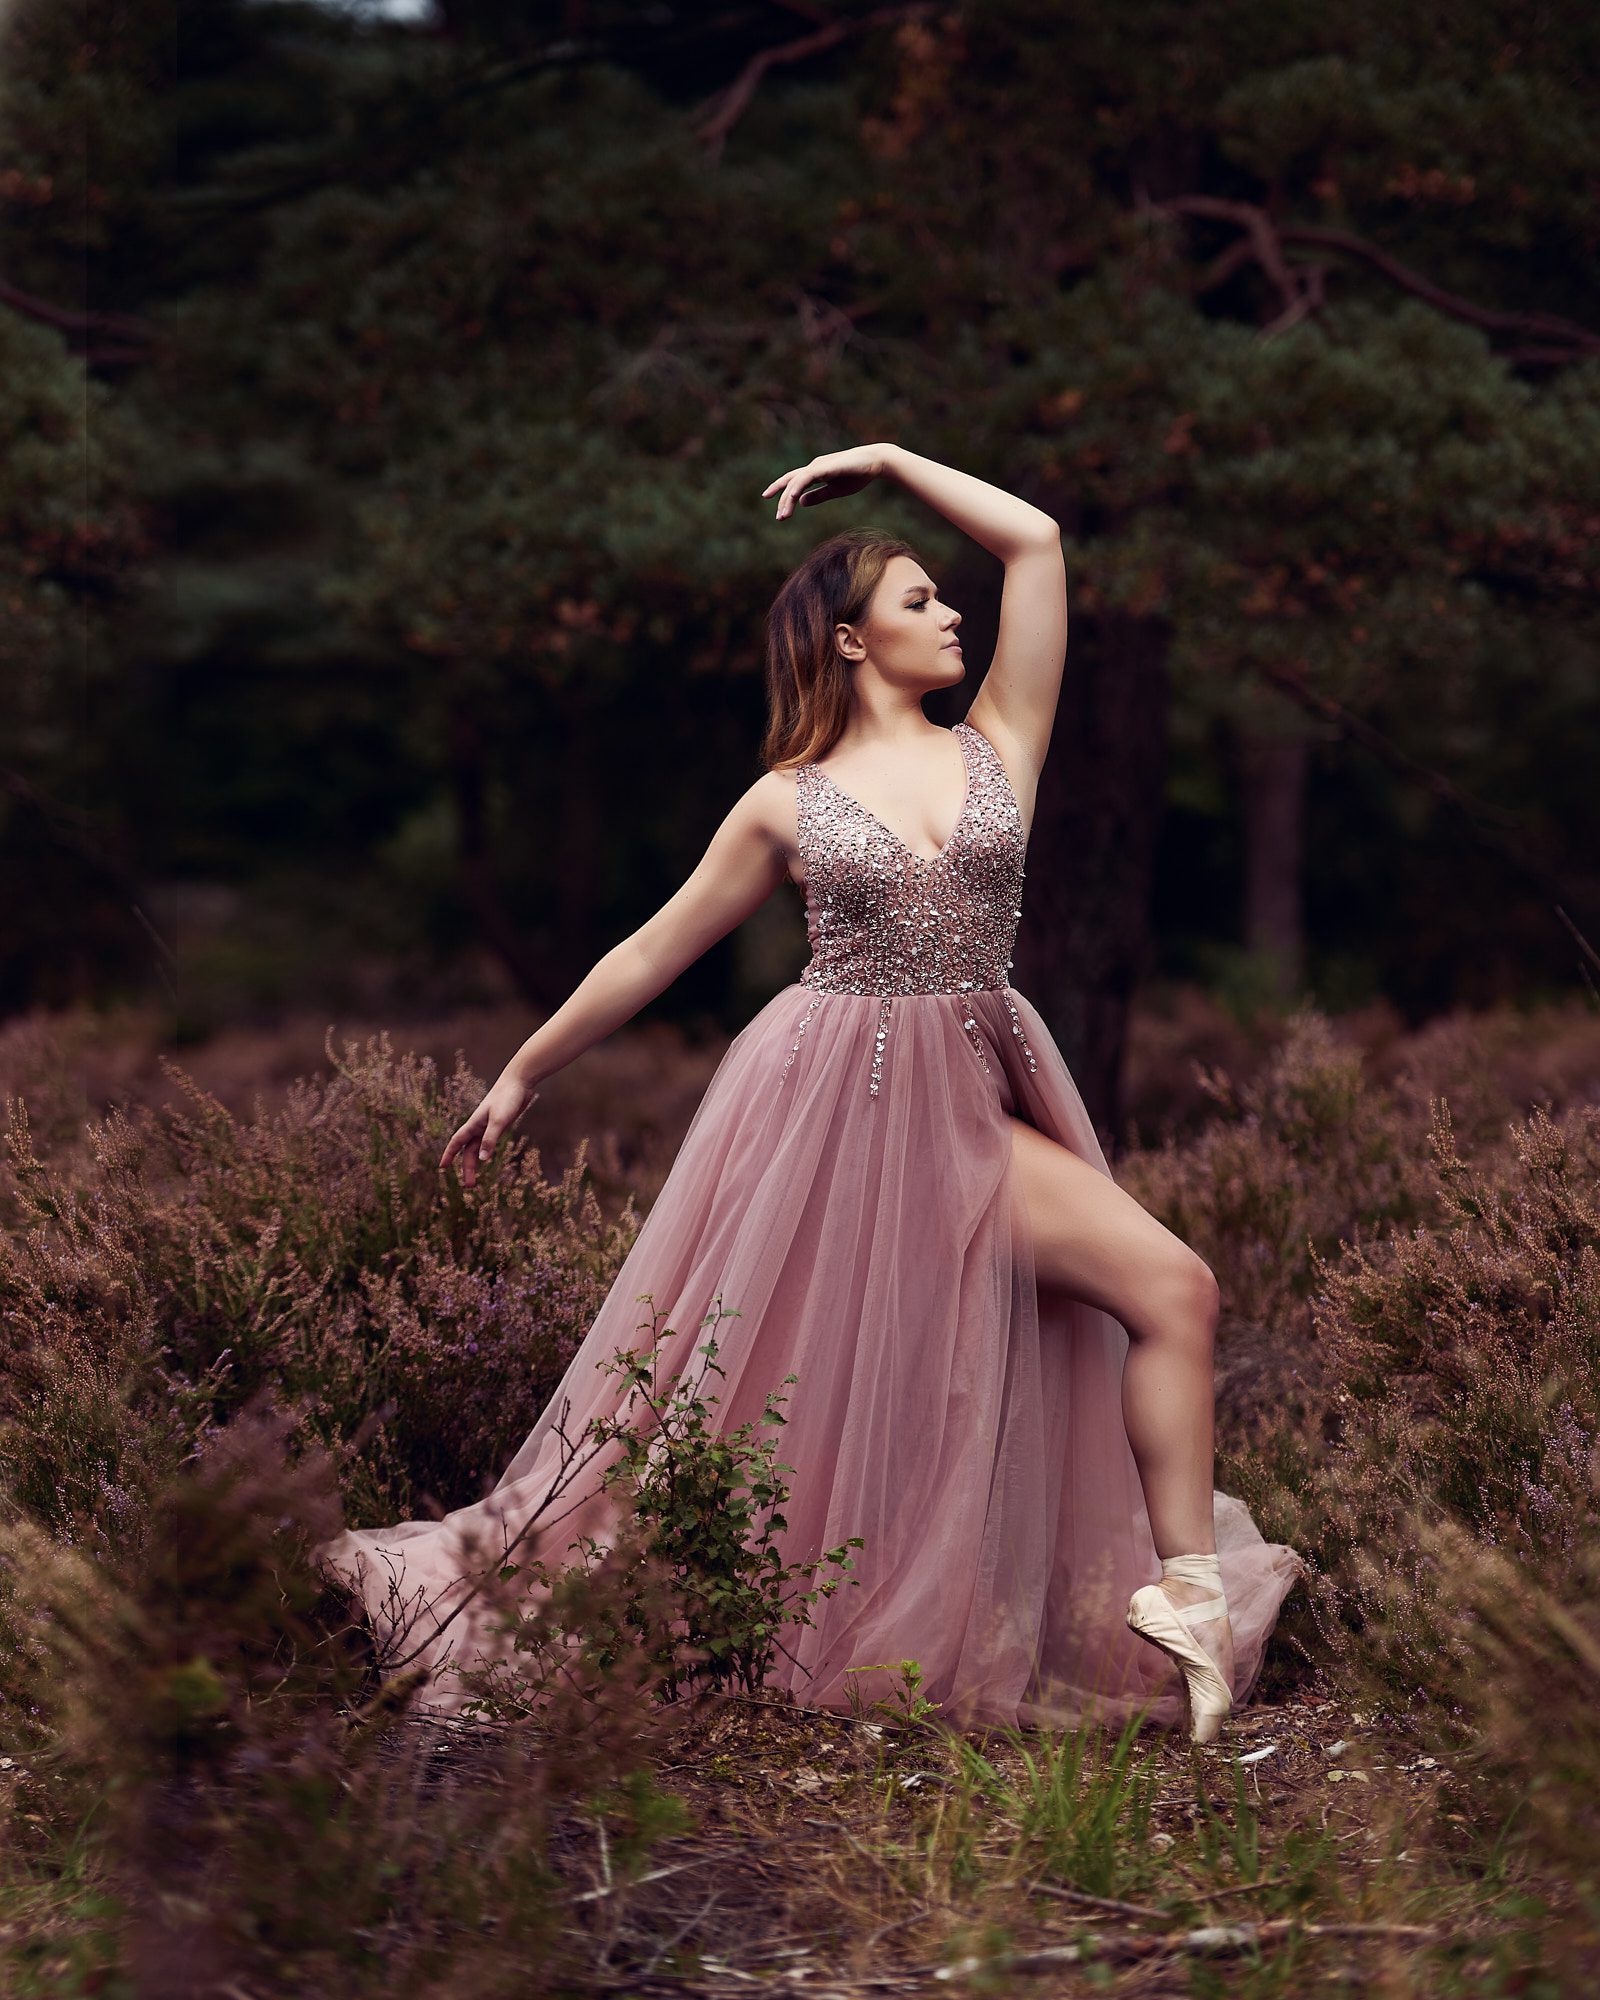 Surrey Dancer in Pointe shoes wearing a pink ballgown